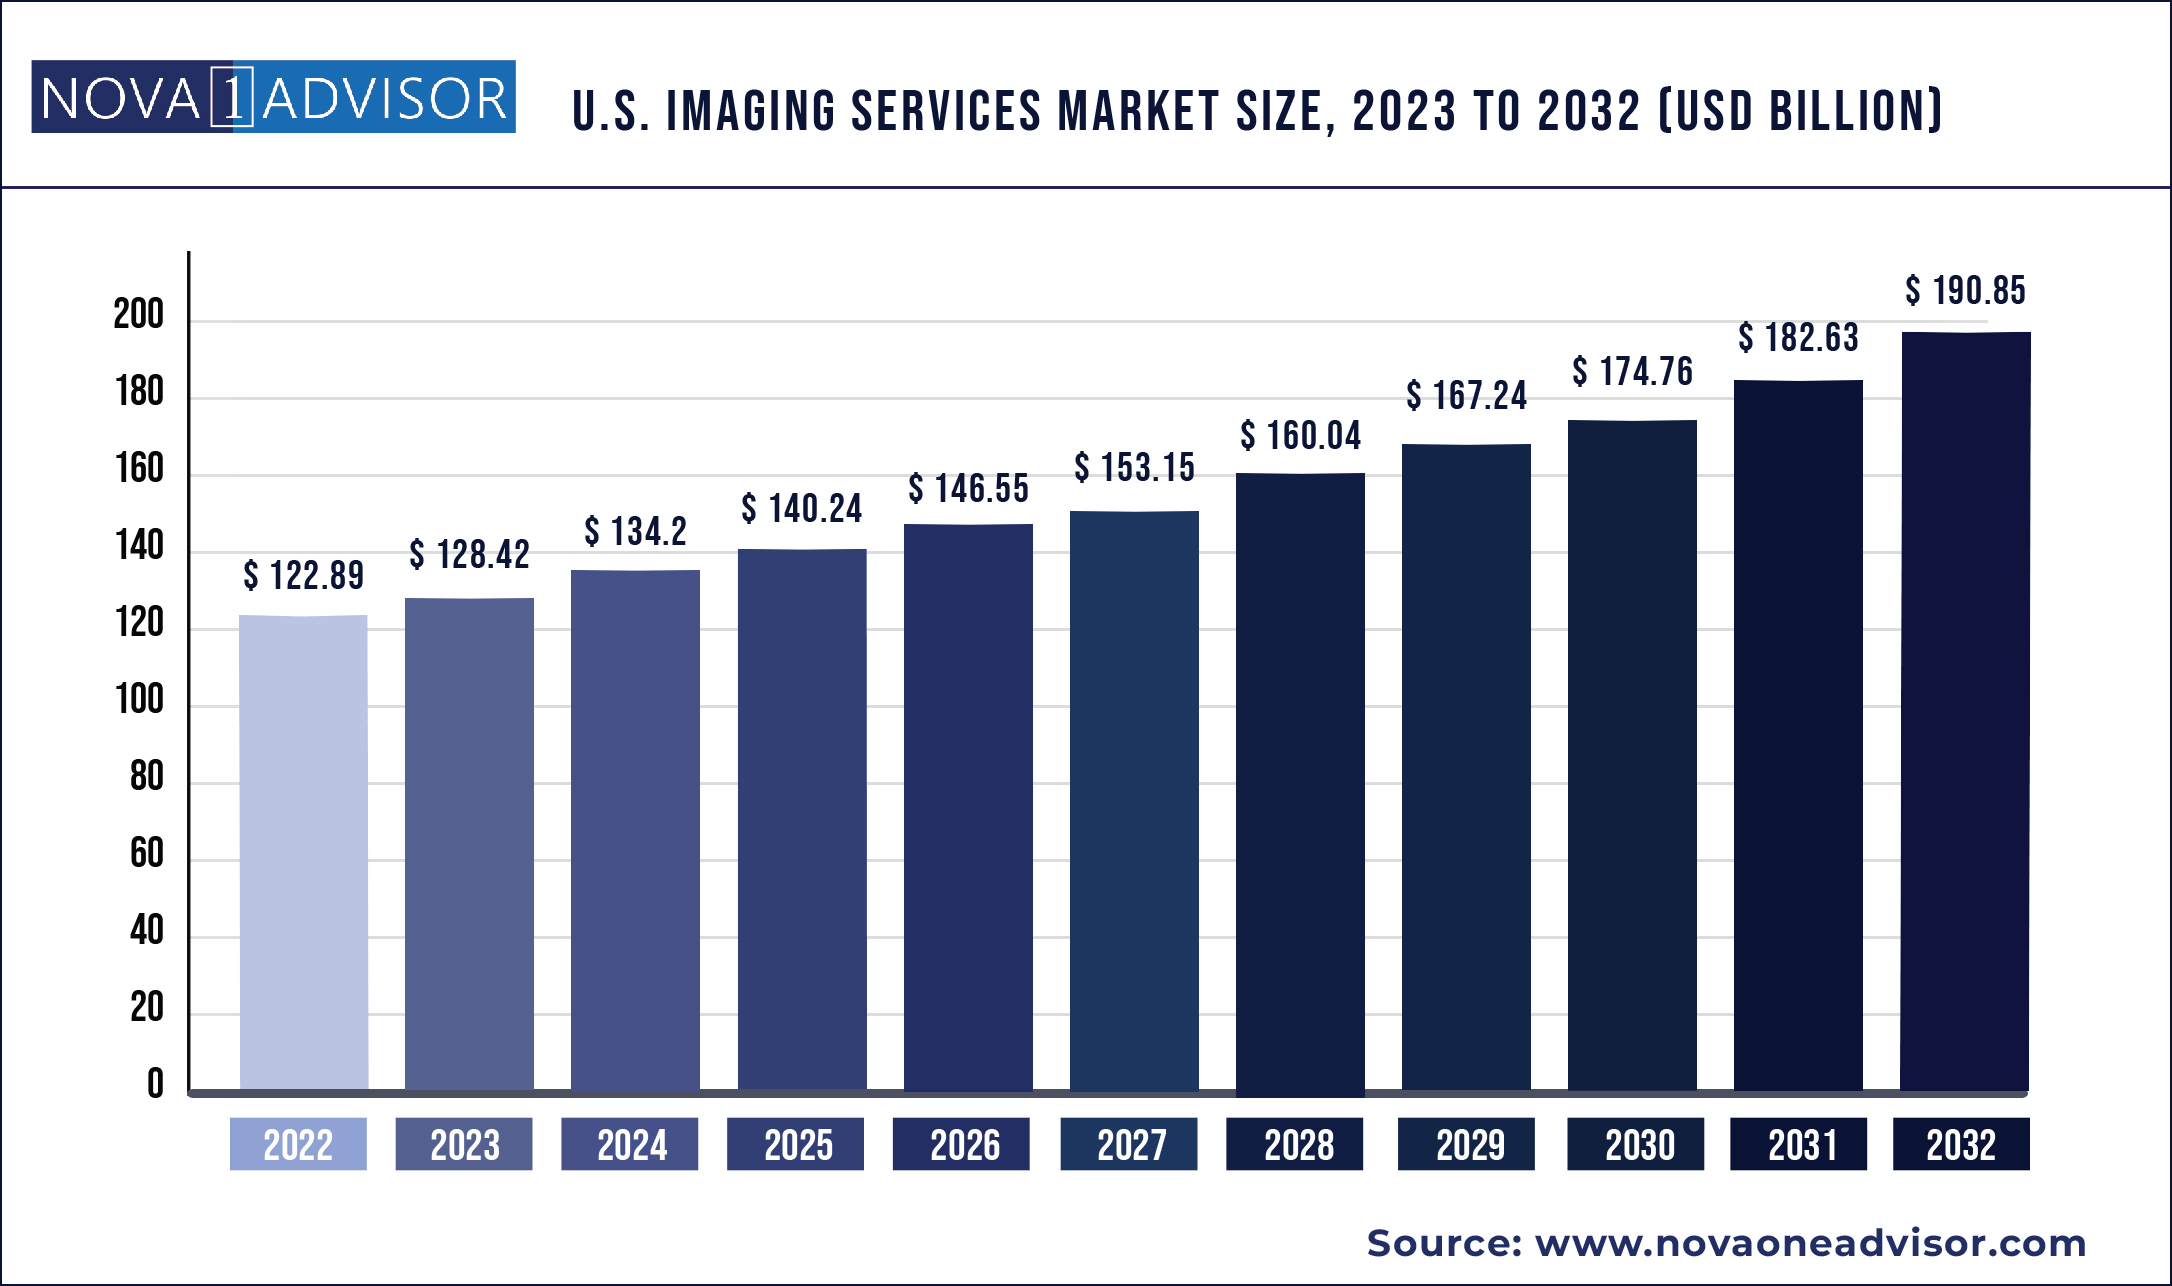 U.S. Imaging Services Market Size